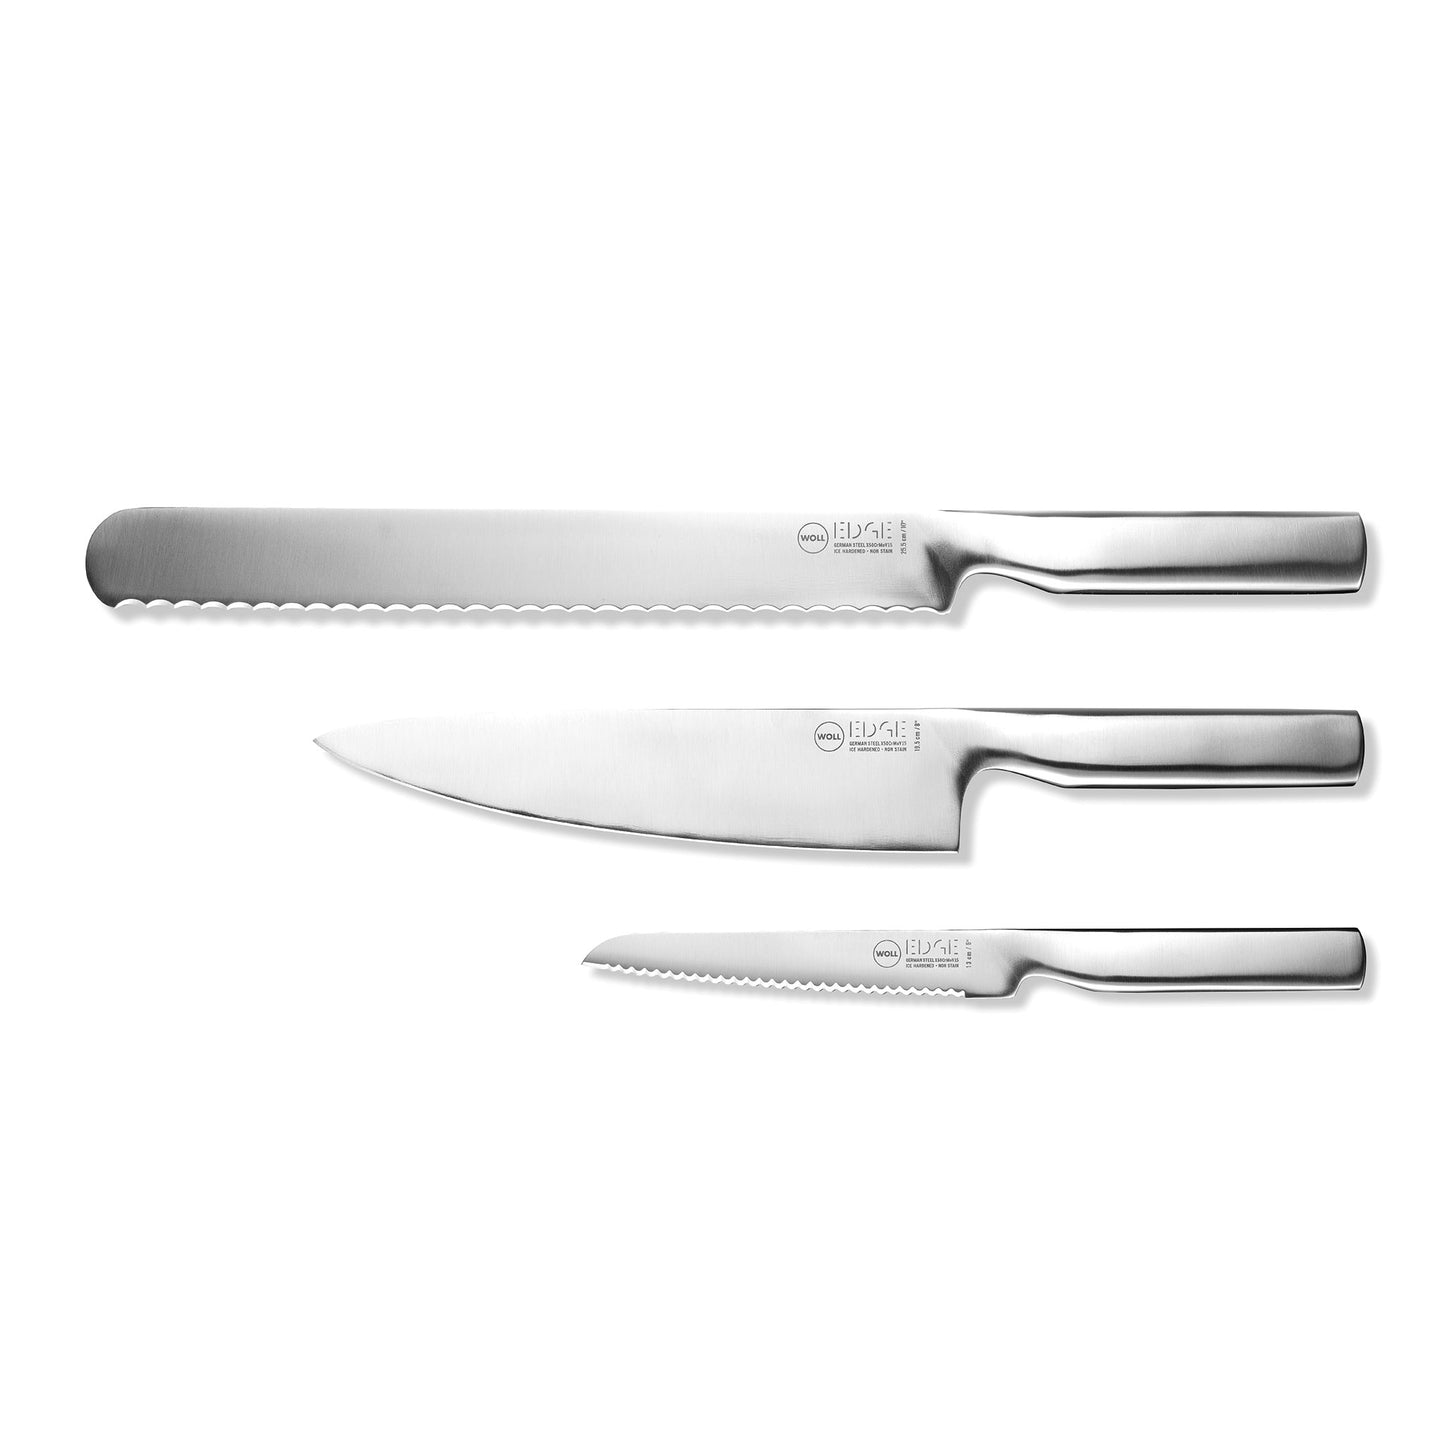 Woll Edge 3pc Essential Knife Set